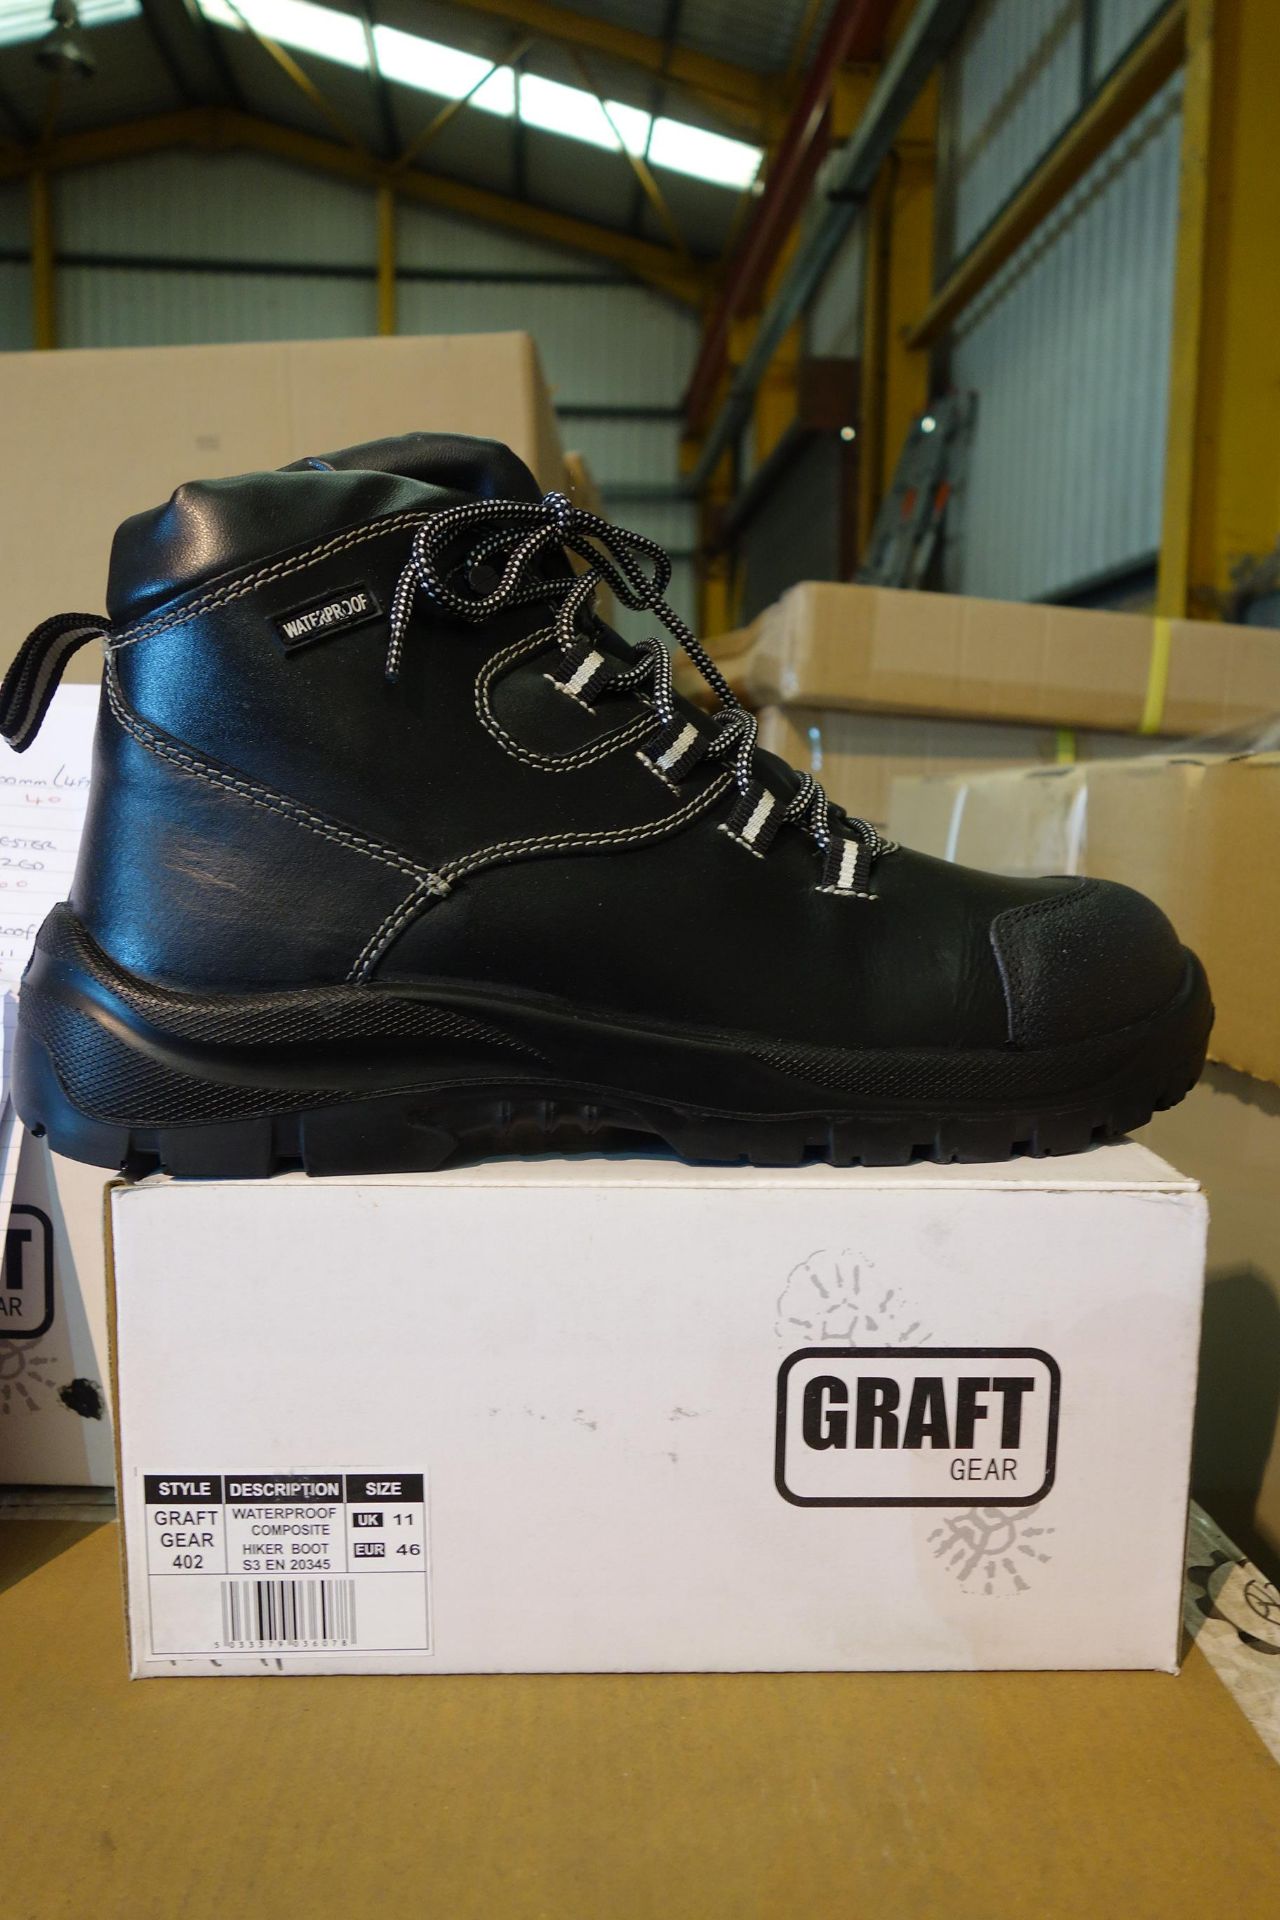 11 Pairs Of Graft Gear 402 Waterproof Composite Hiker Safty Boots Size UK11 EUR 46 Black